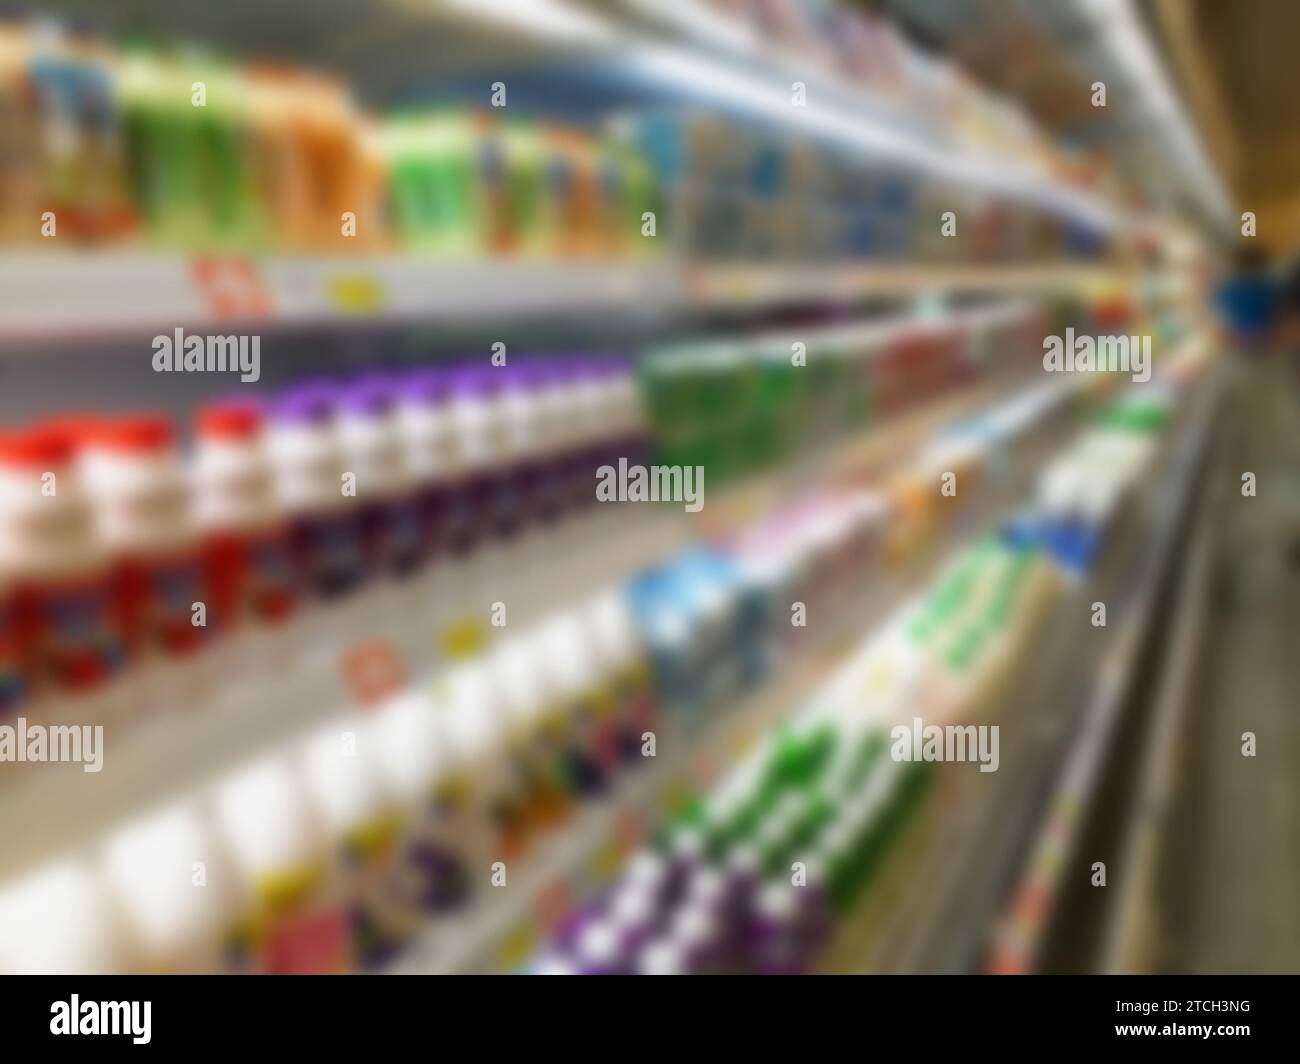 blur milk products bottles on refrigerator shelf in supermarket Stock Photo